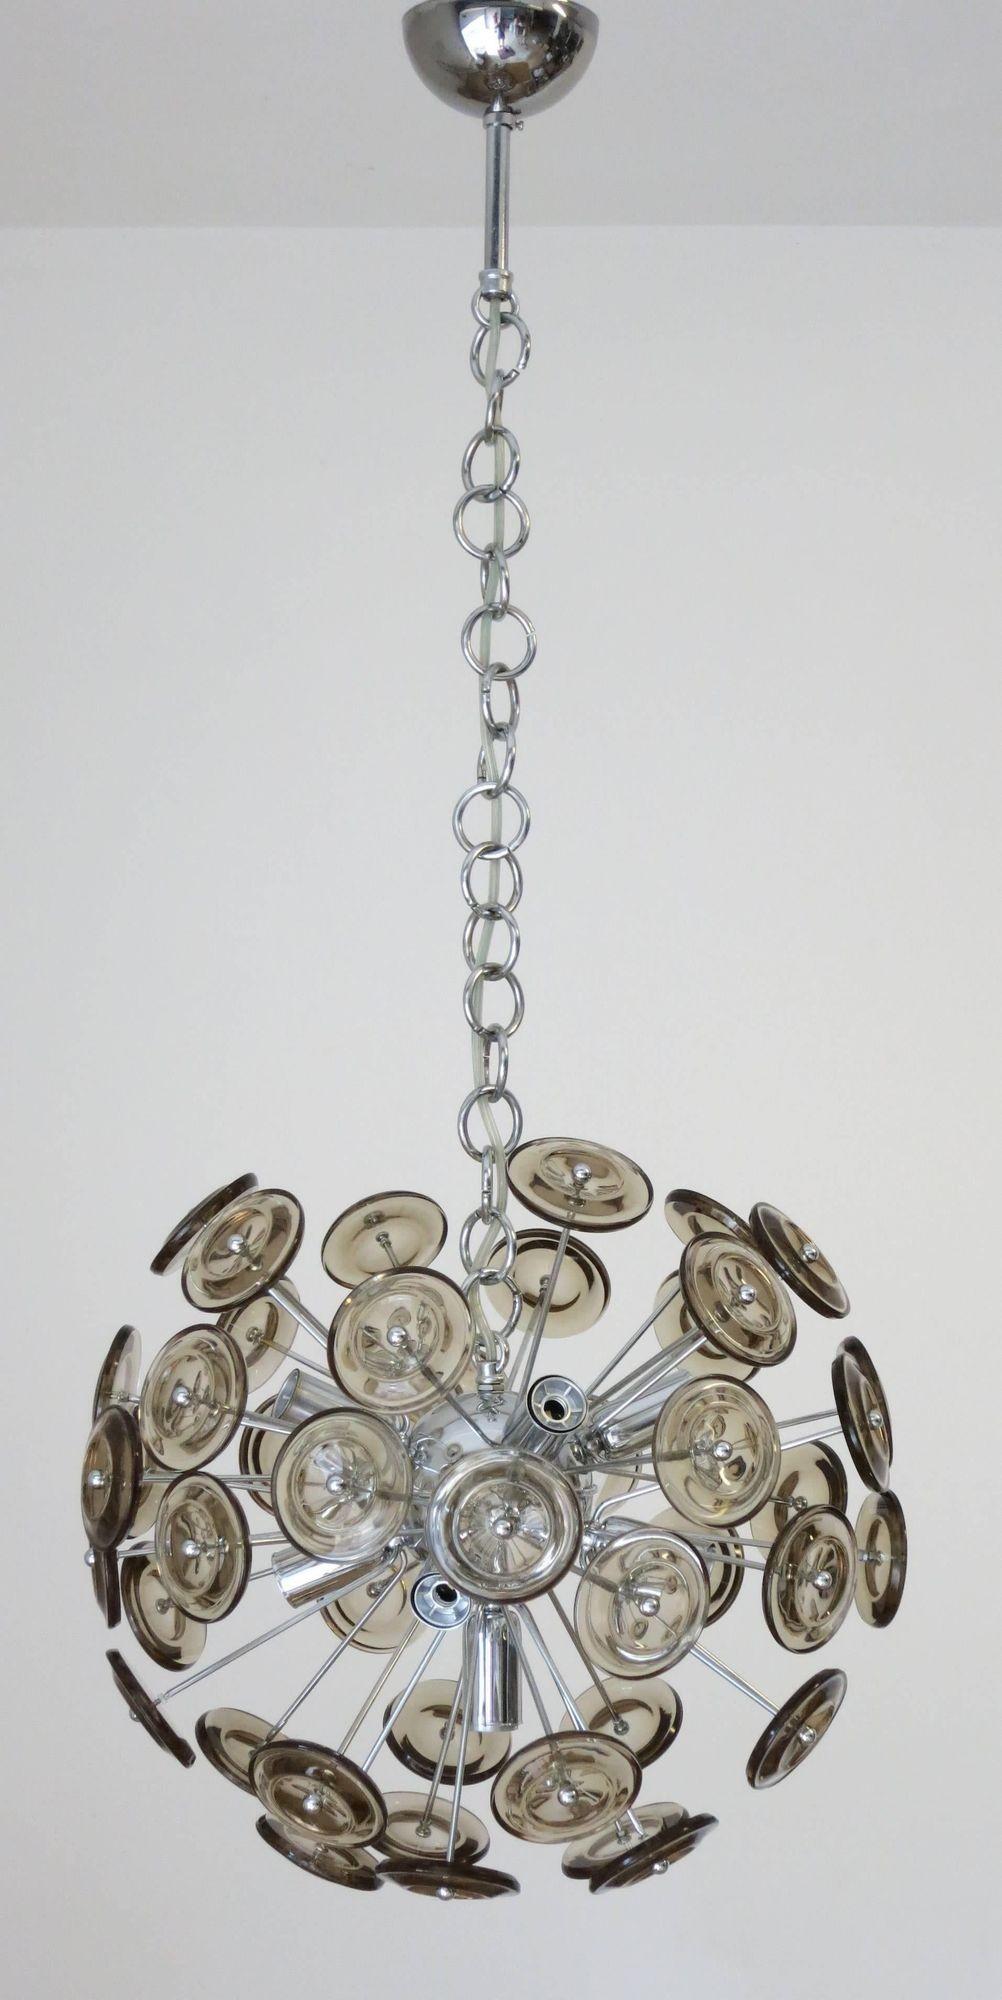 Original vintage Sputnik chandelier with smoky glass disks on chrome frame. Designed by Cristal Arte, circa 1960s. Made in Italy. 
Dimensions:
17.5